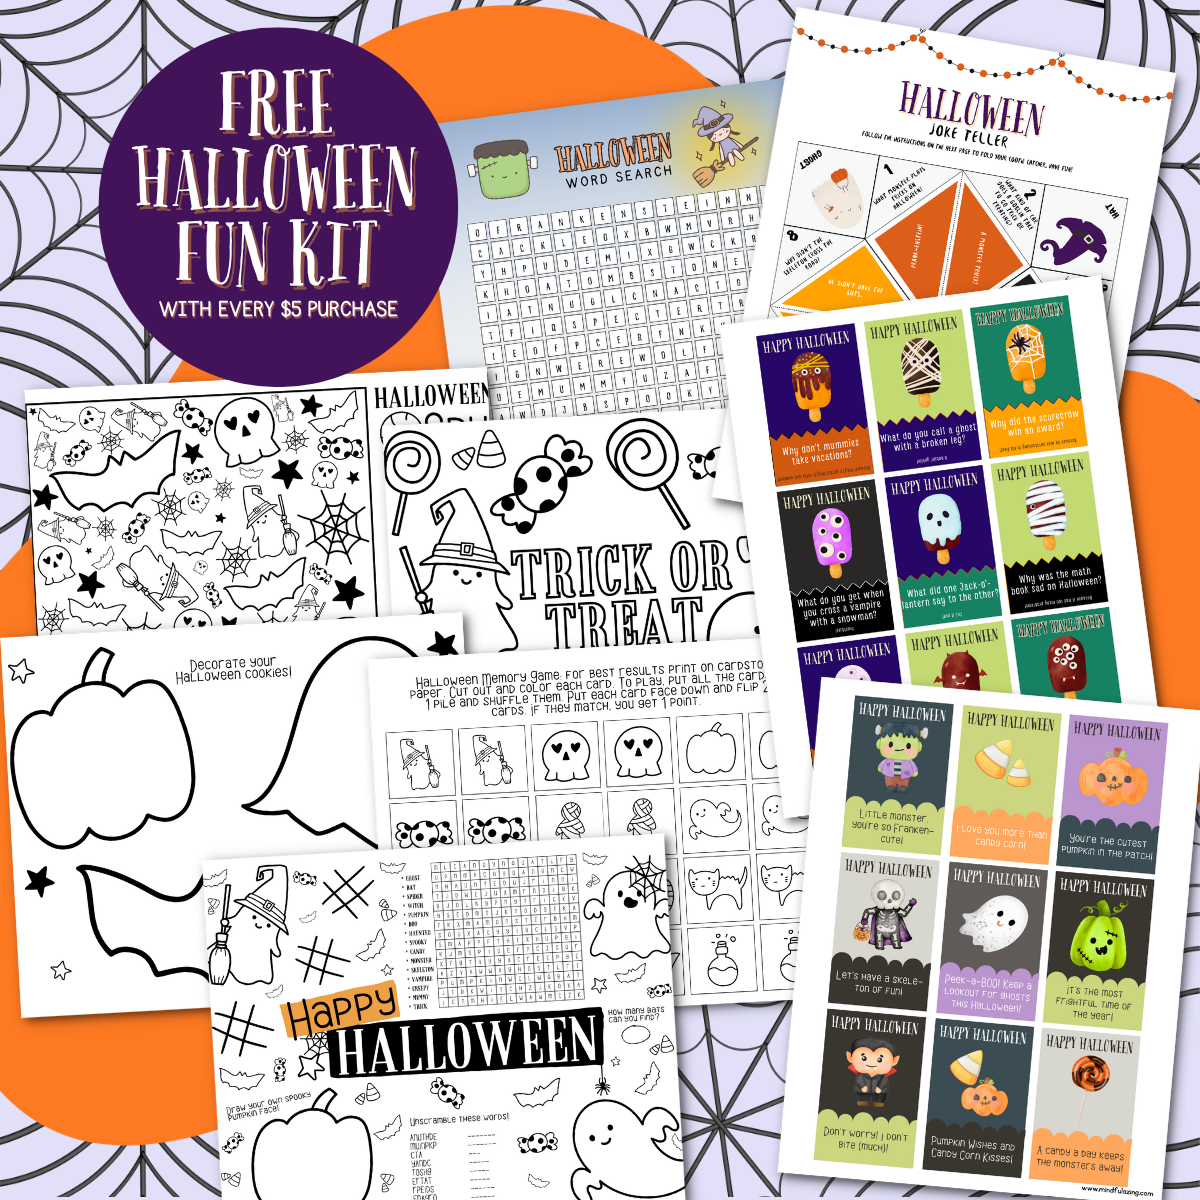 Halloween Fun Kit (Free With Purchase!)